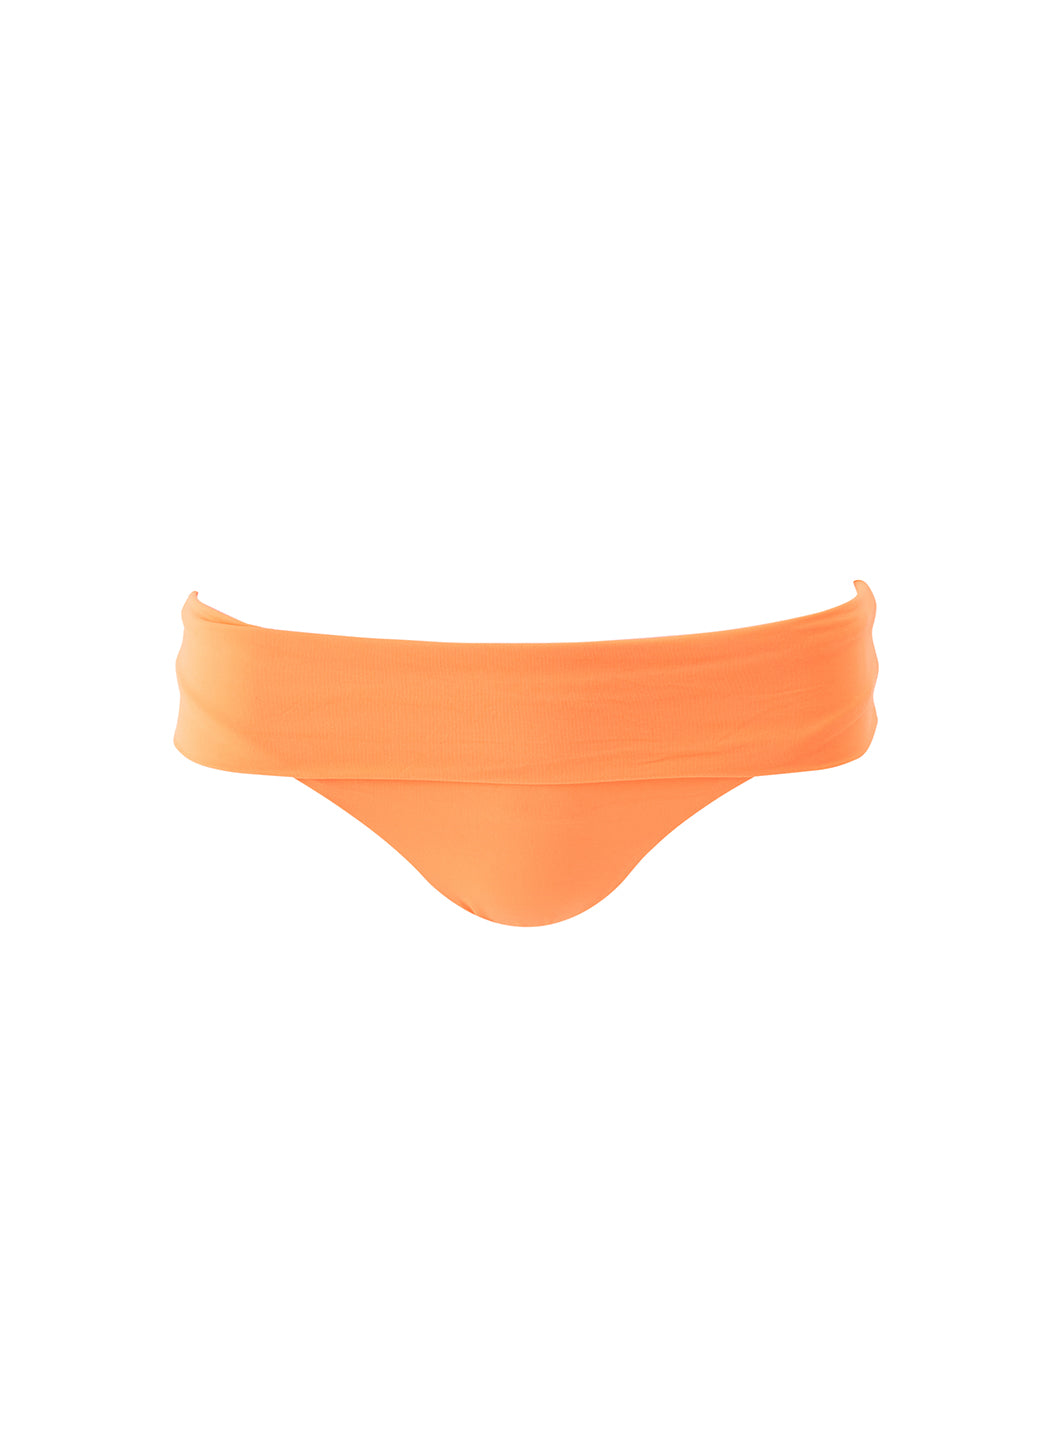 Brussels Orange Bikini Bottom 2024 Cutout